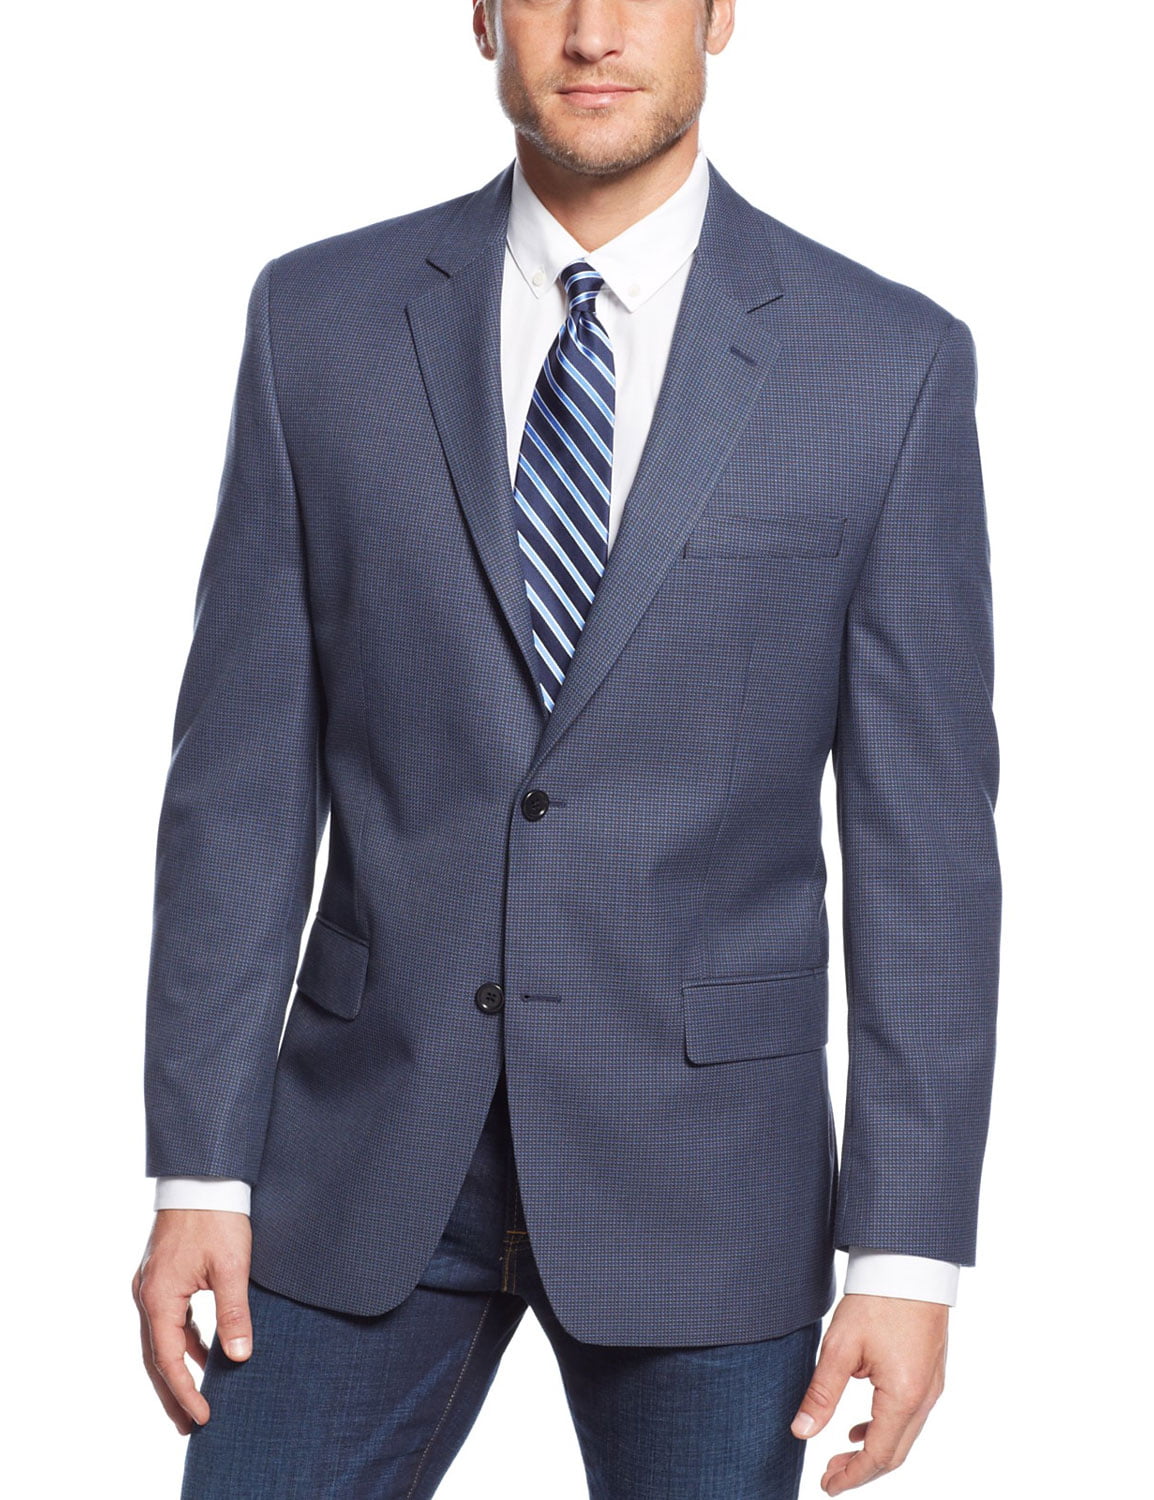 Michael Kors - Regular Fit Blazer Navy Blue Neat Two Button Sportcoat ...